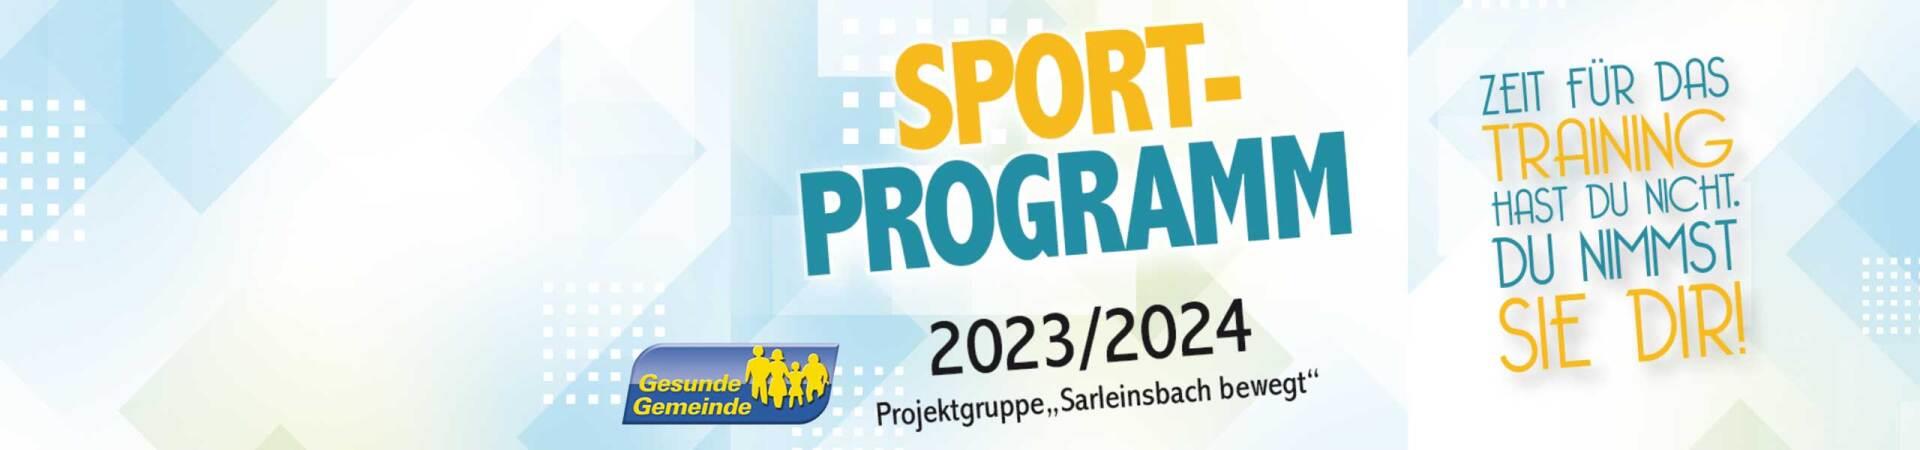 Sportfolder 2022/23